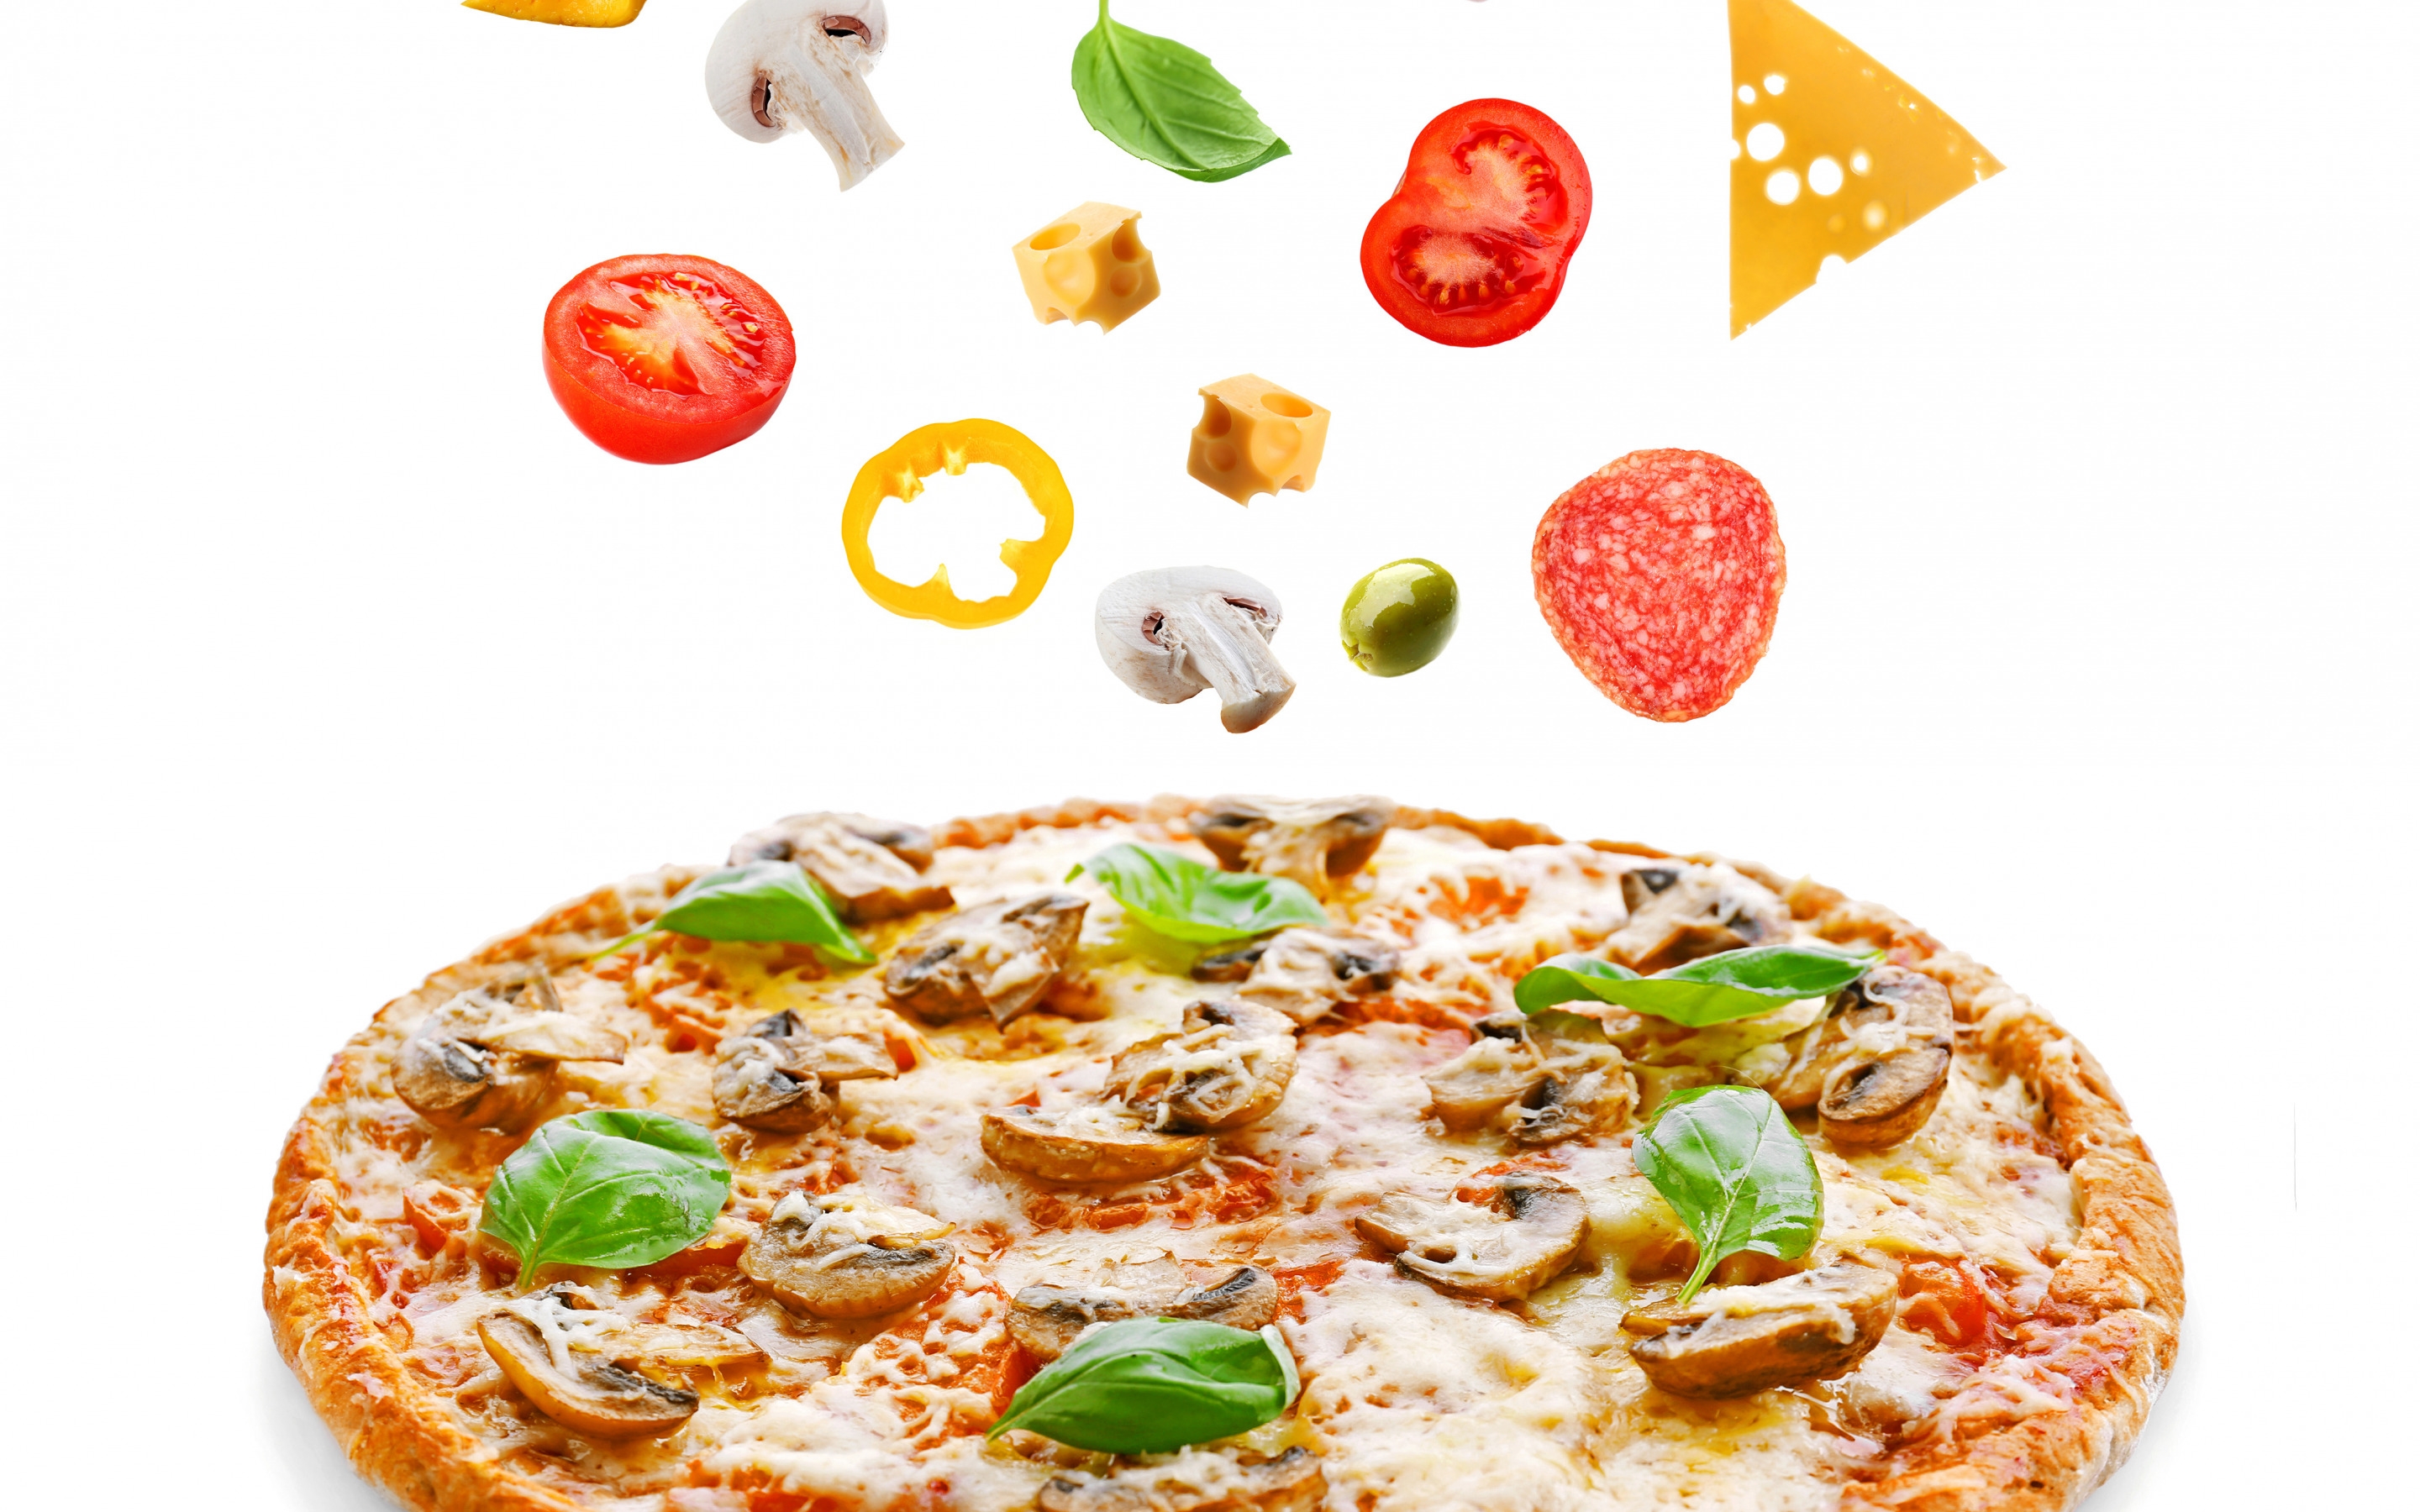 Pizza reaby. "Пицца". Пицца на белом фоне. Ингредиенты для пиццы. Пицца на прозрачном фоне.